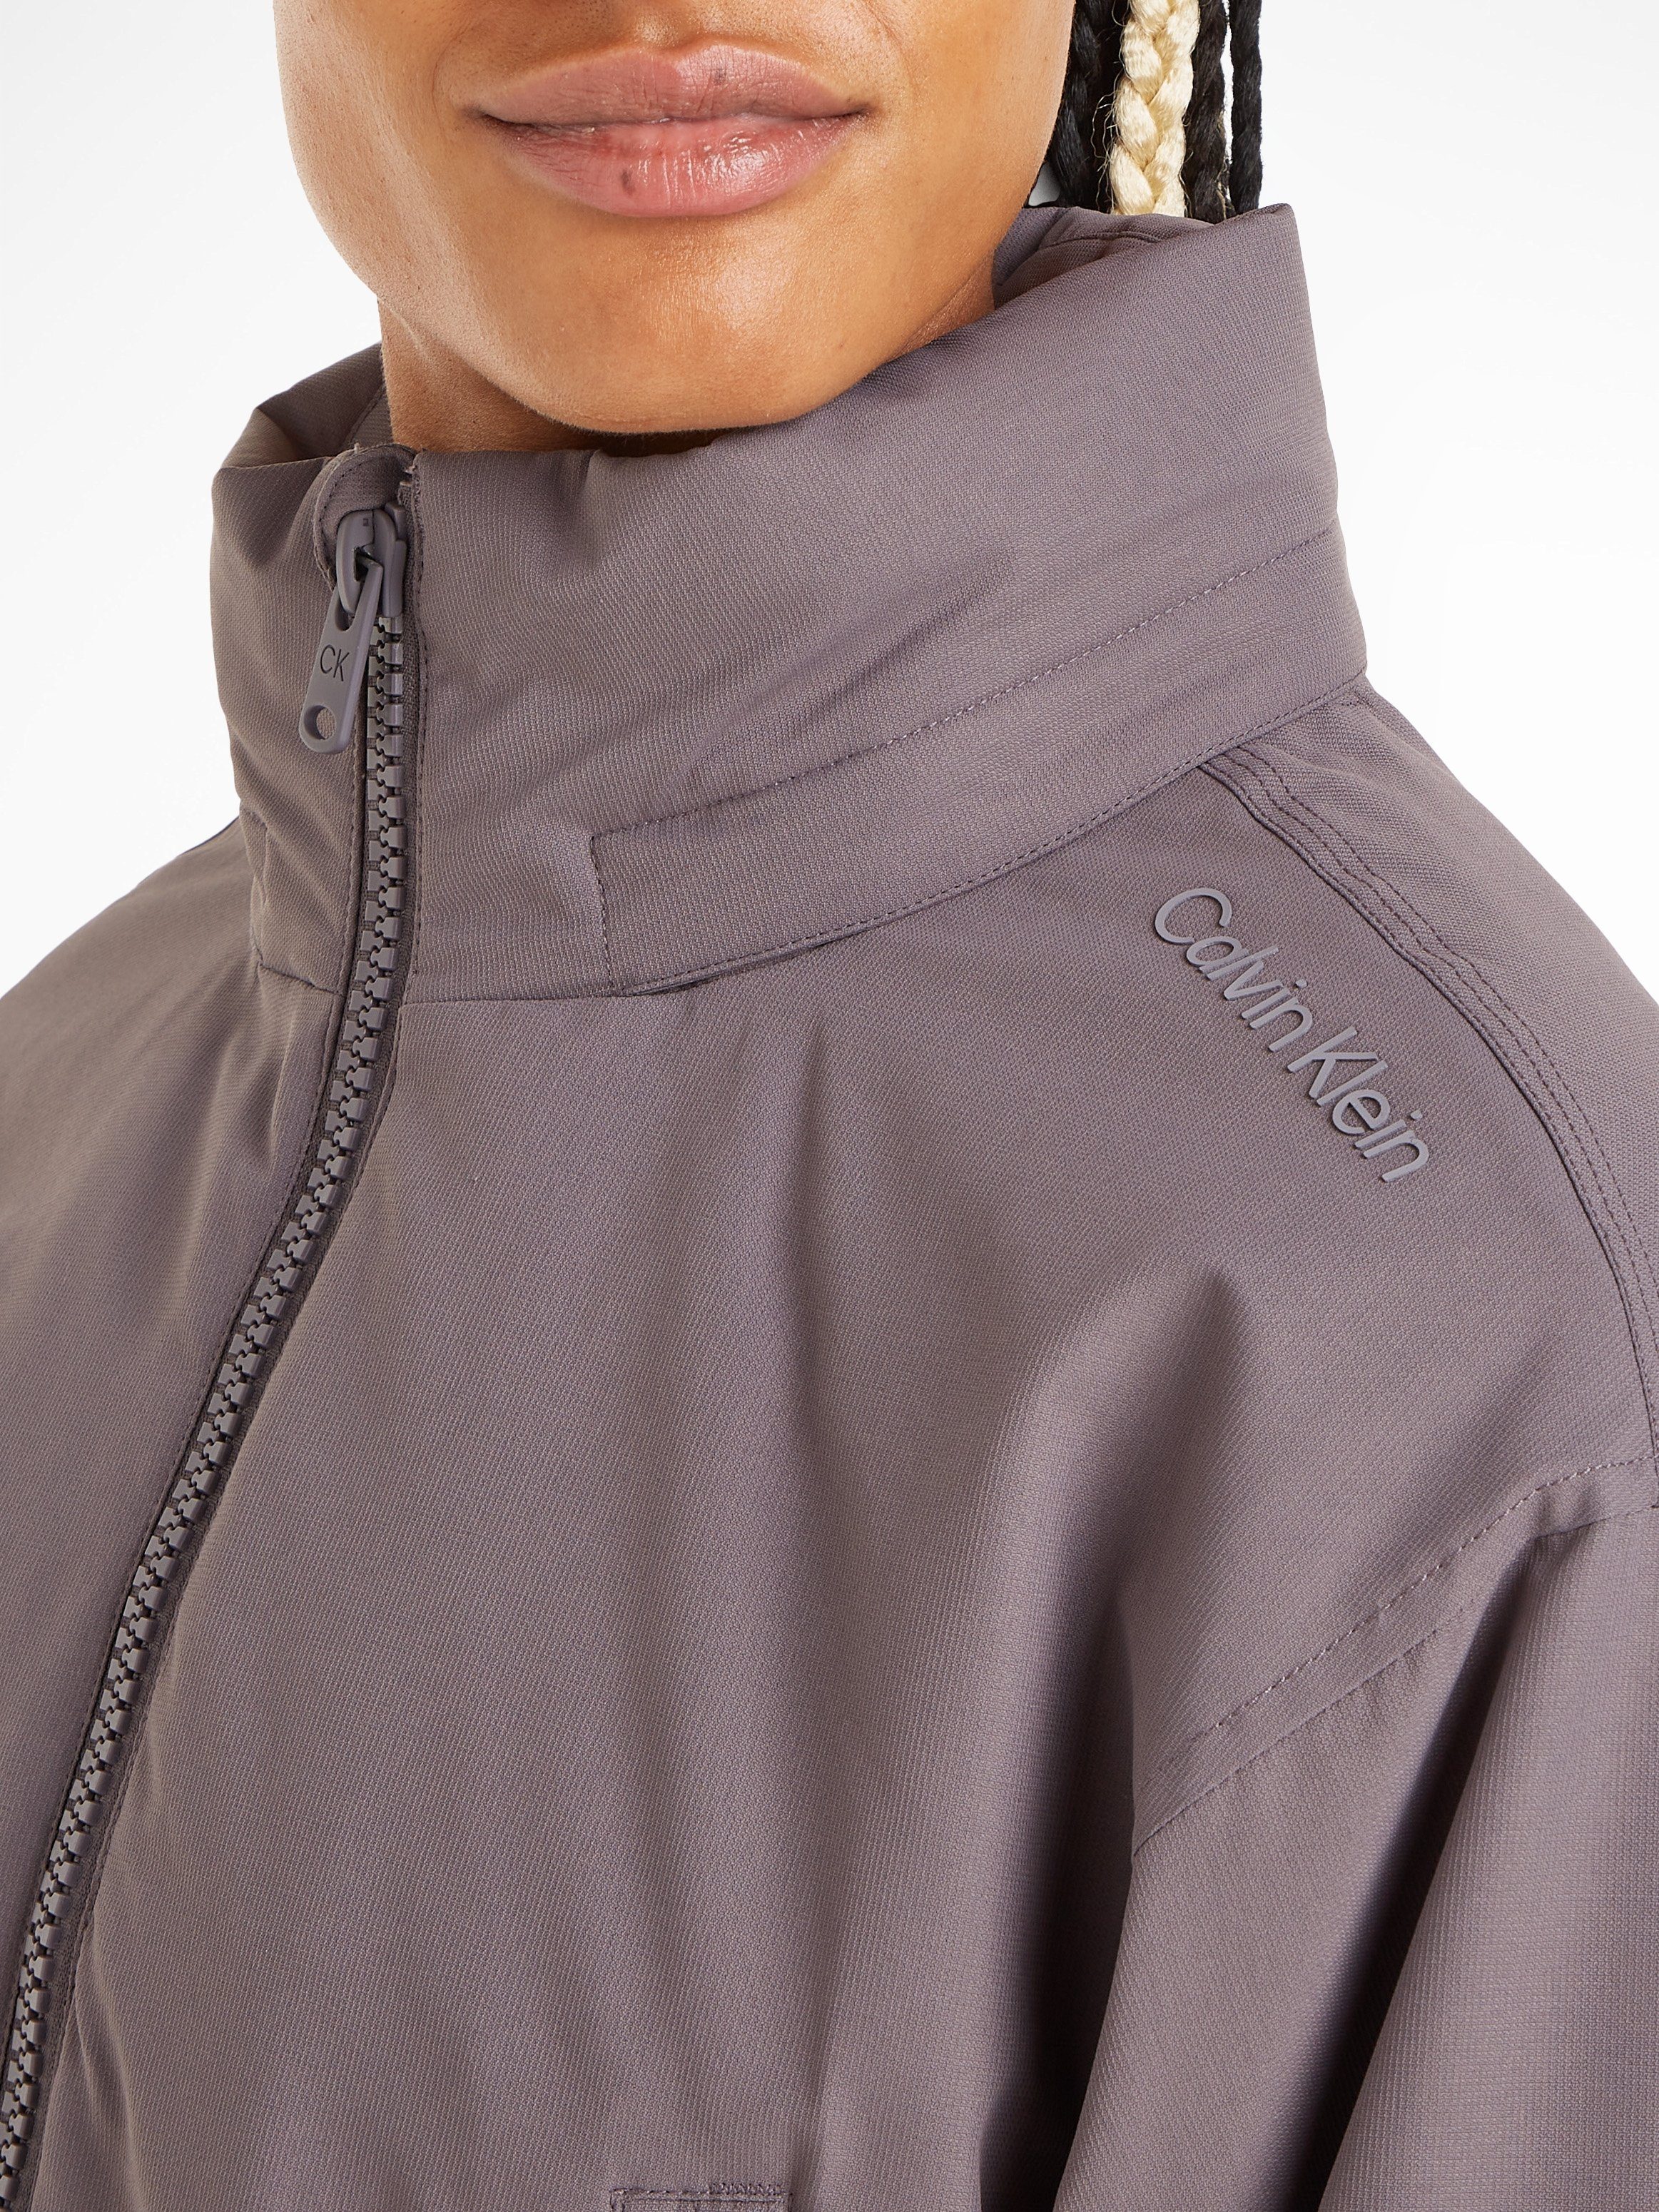 Calvin Klein Sport Outdoorjacke PW - grau Jacket Padded